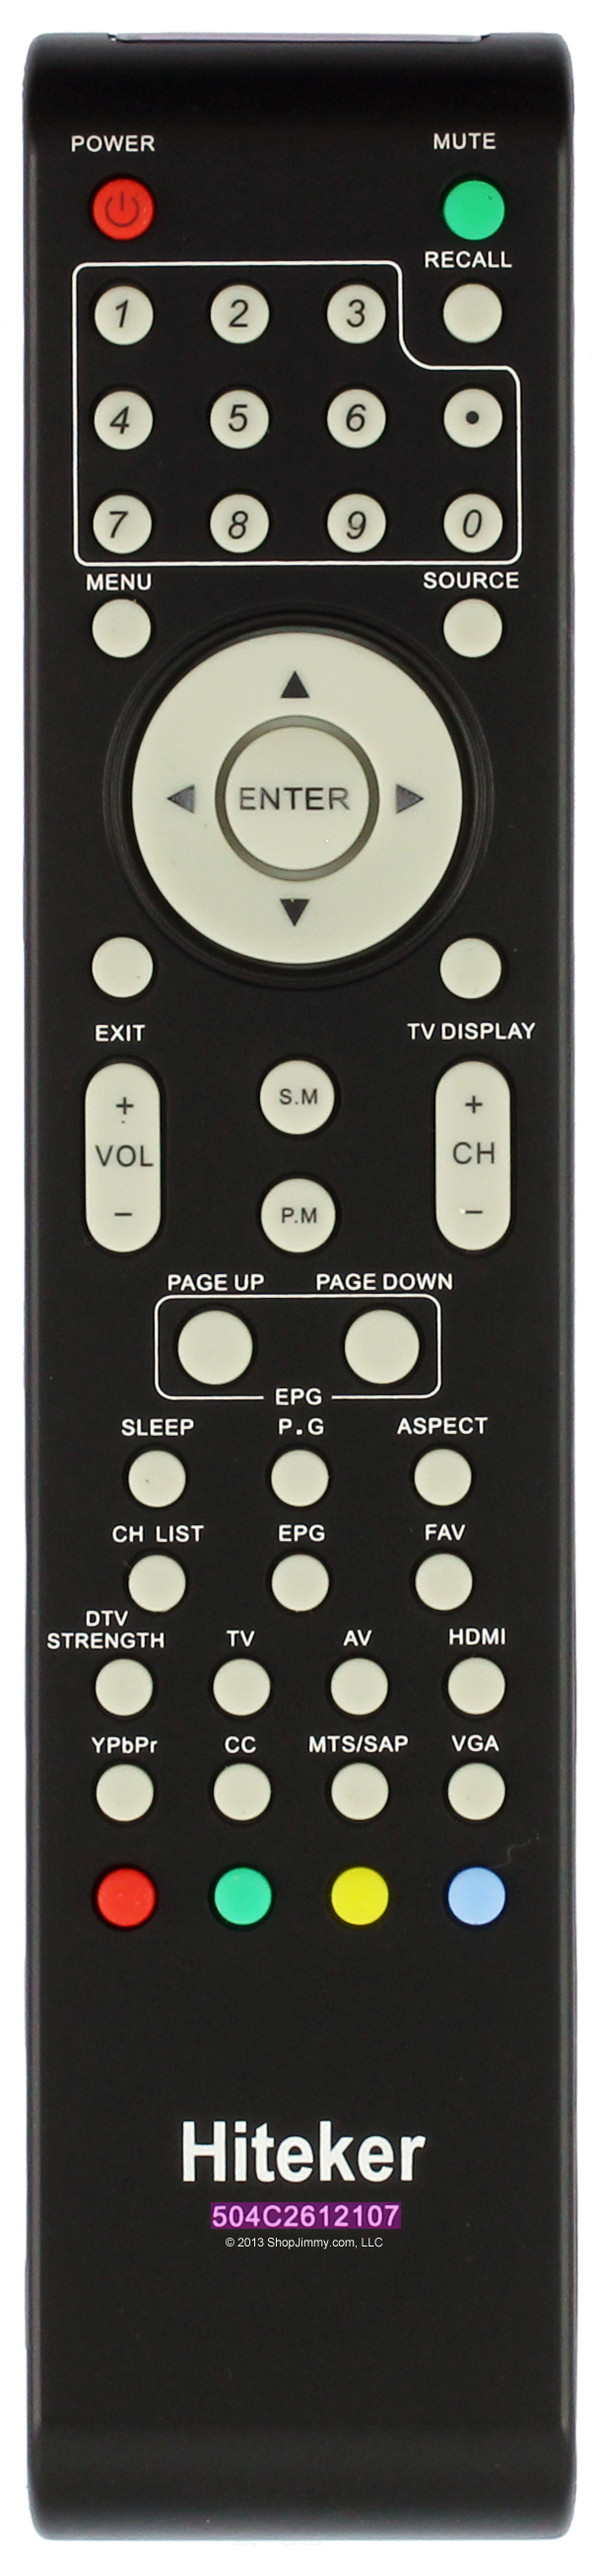 Hiteker 504C2612107 Remote Control